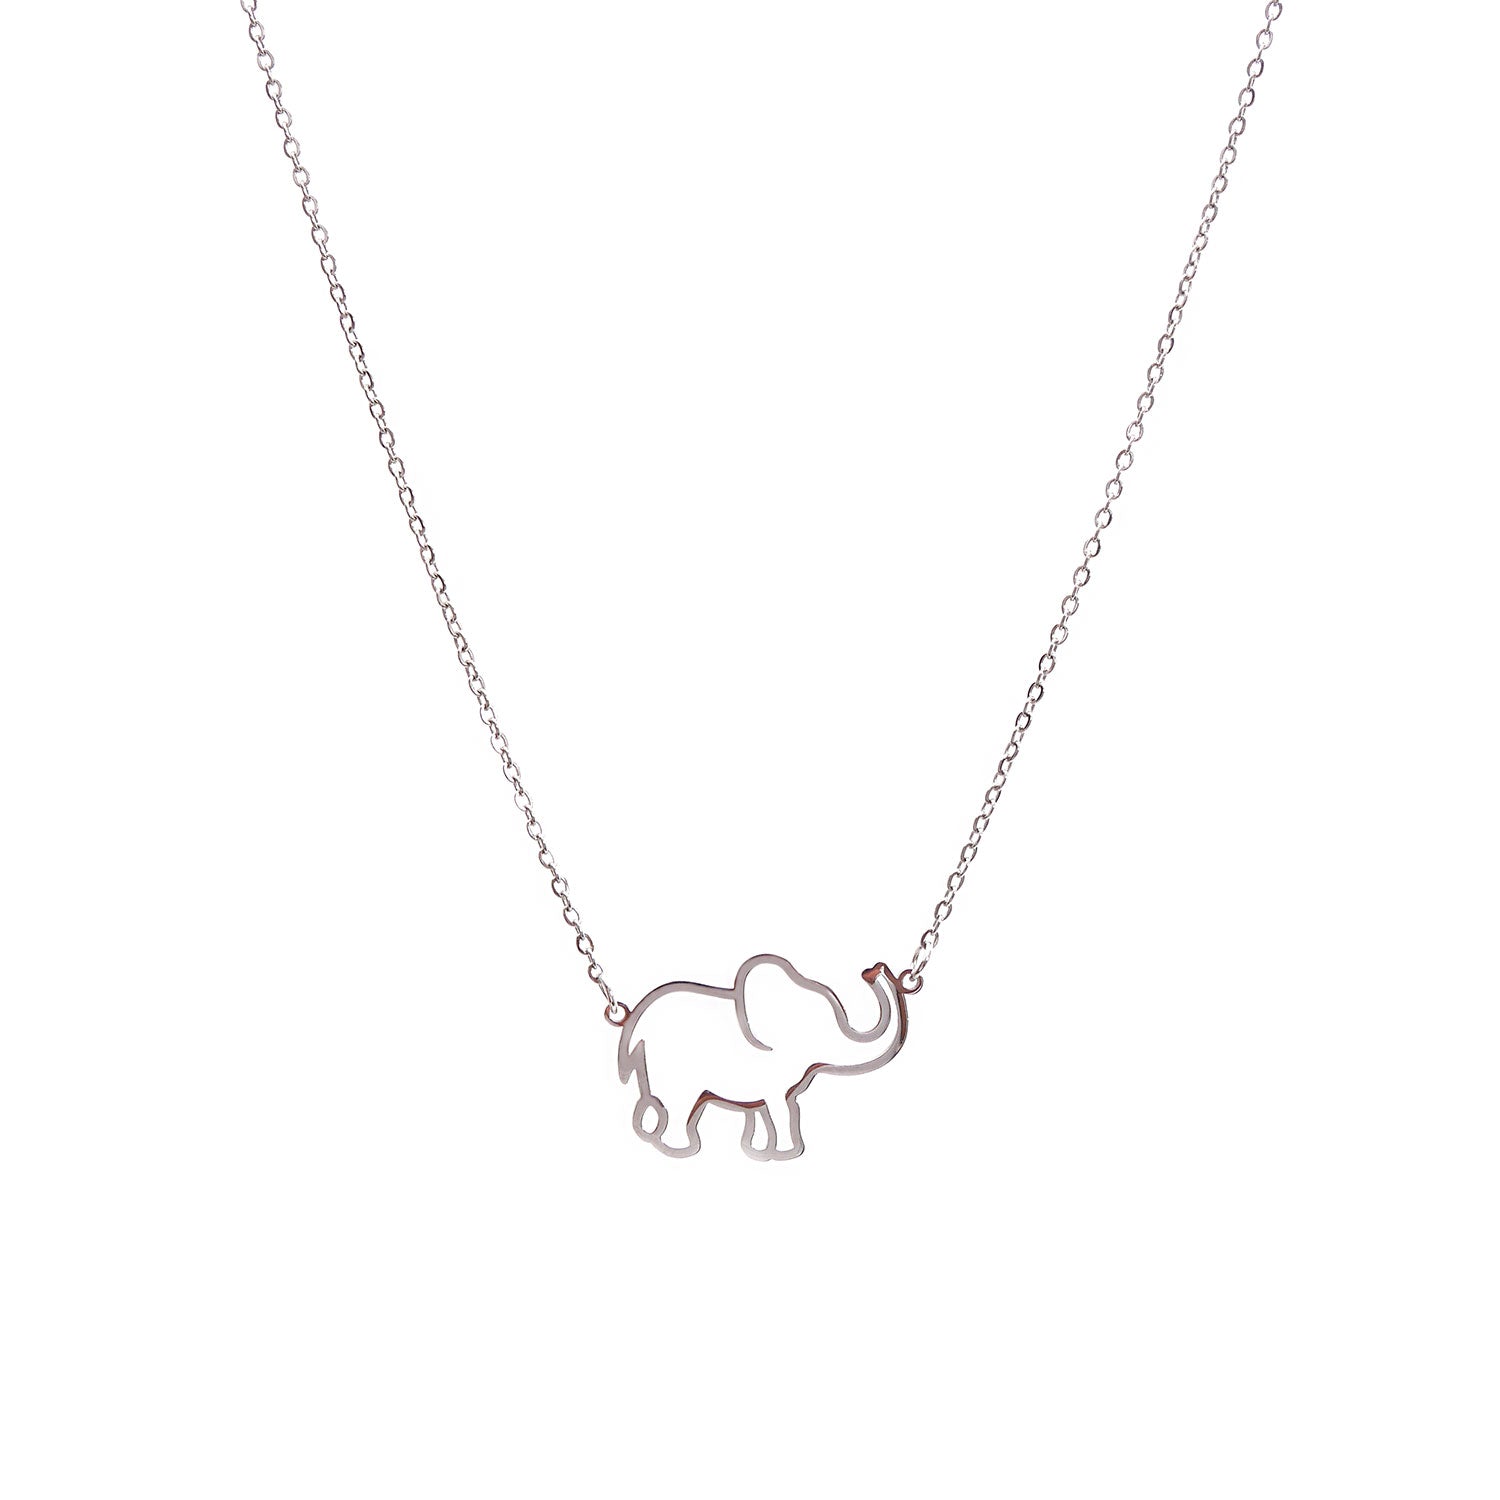 Majestic Elephant Necklace in Rhodium